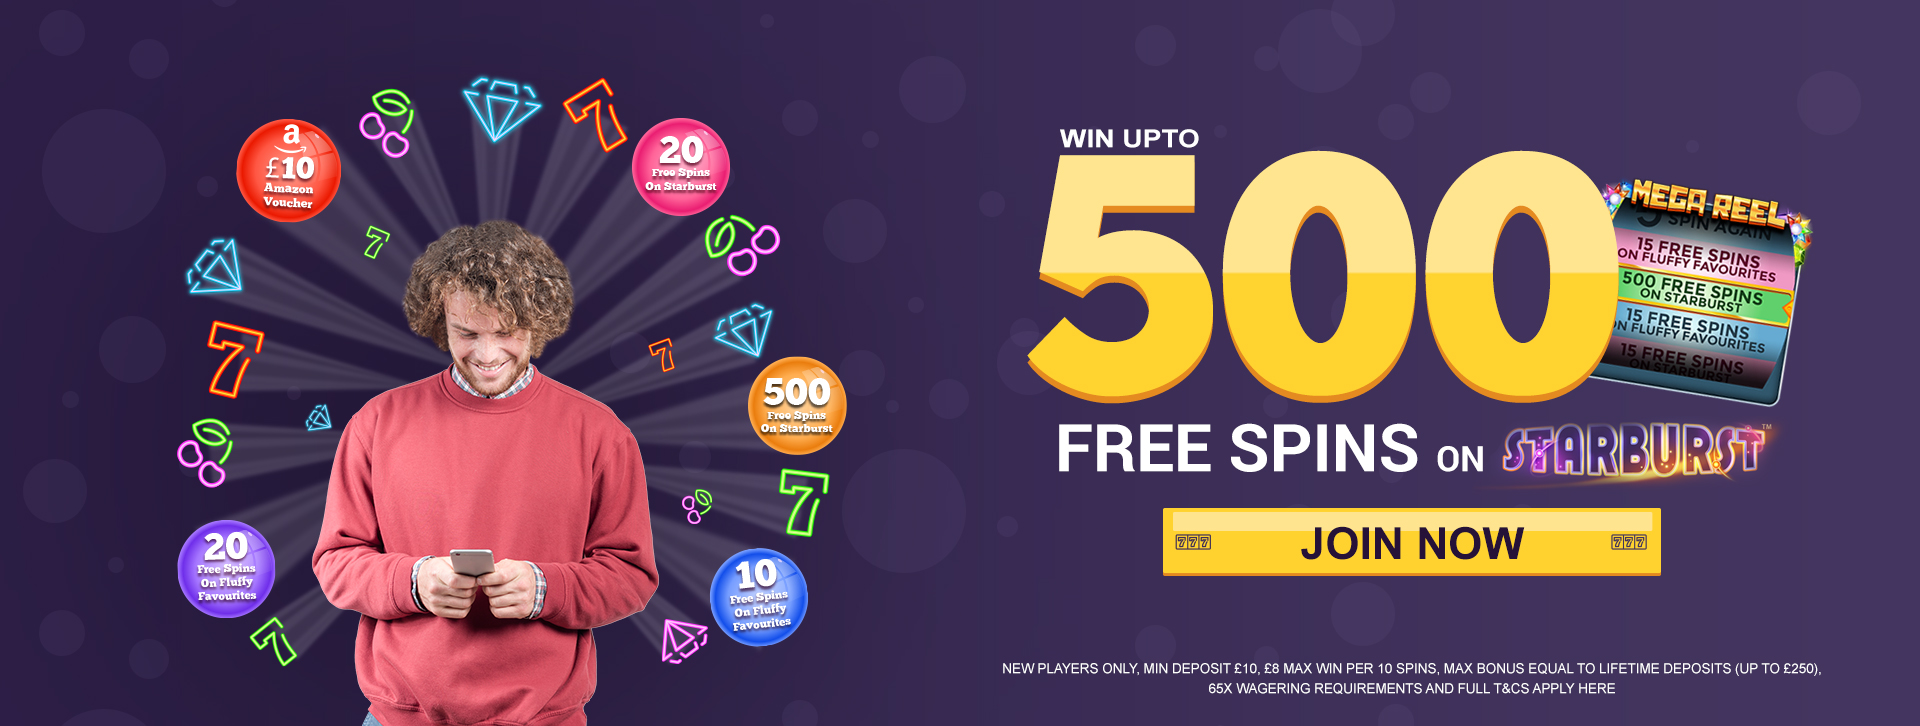 Win Upto 500 Free Spins on Starburst